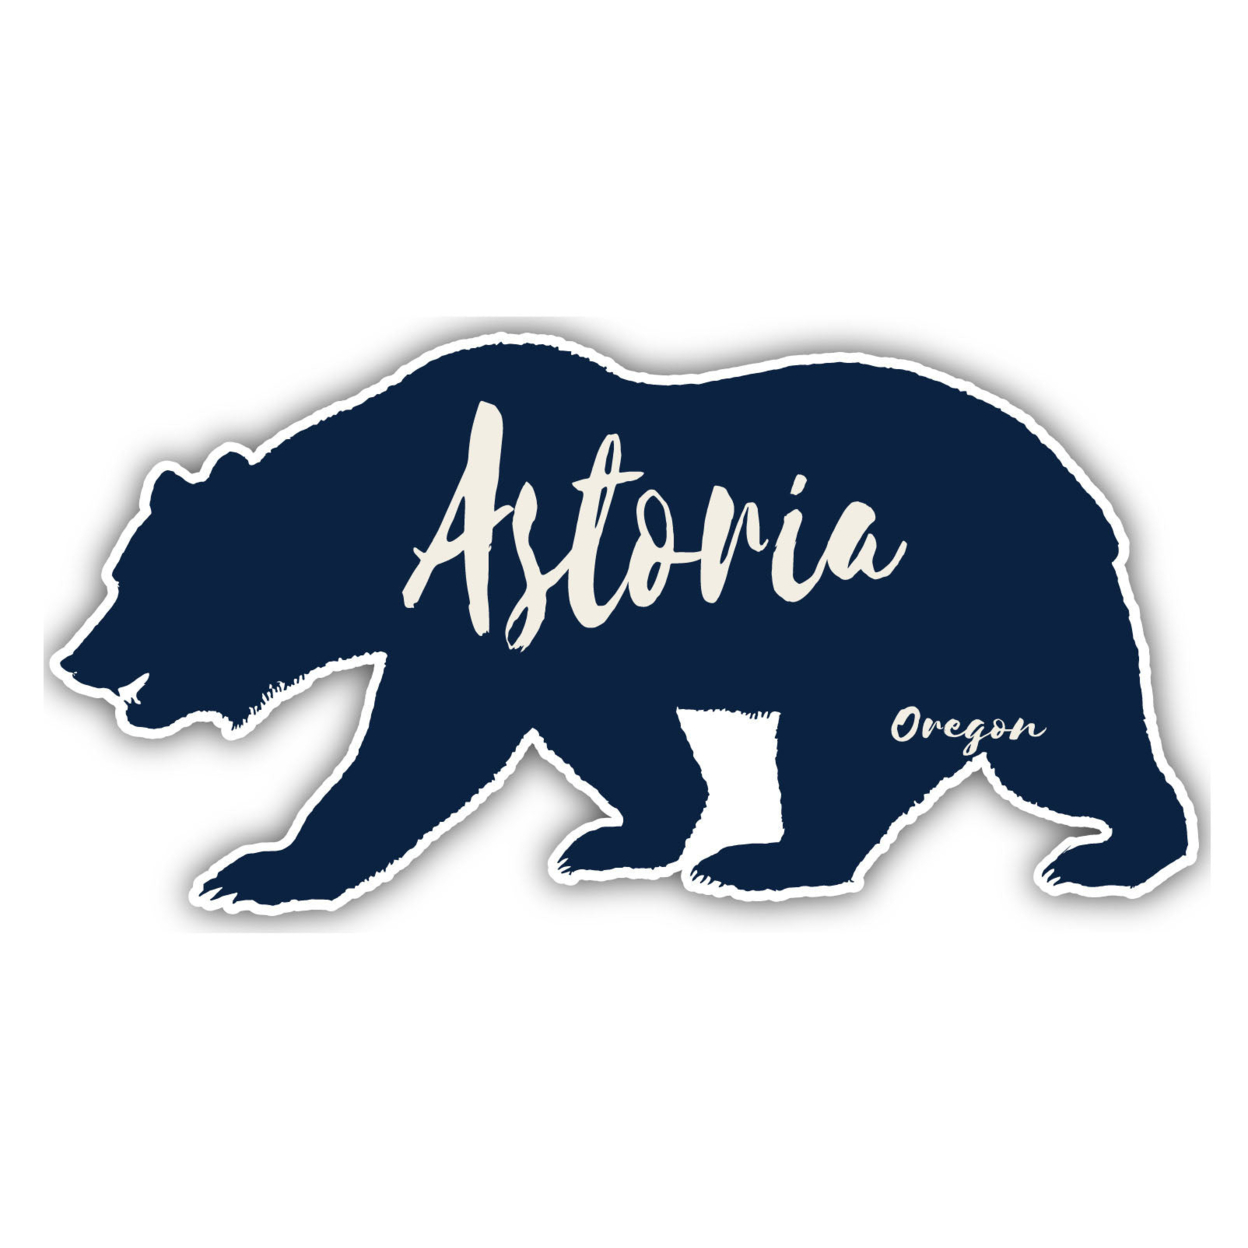 Astoria Oregon Souvenir Decorative Stickers (Choose Theme And Size) - Single Unit, 4-Inch, Camp Life